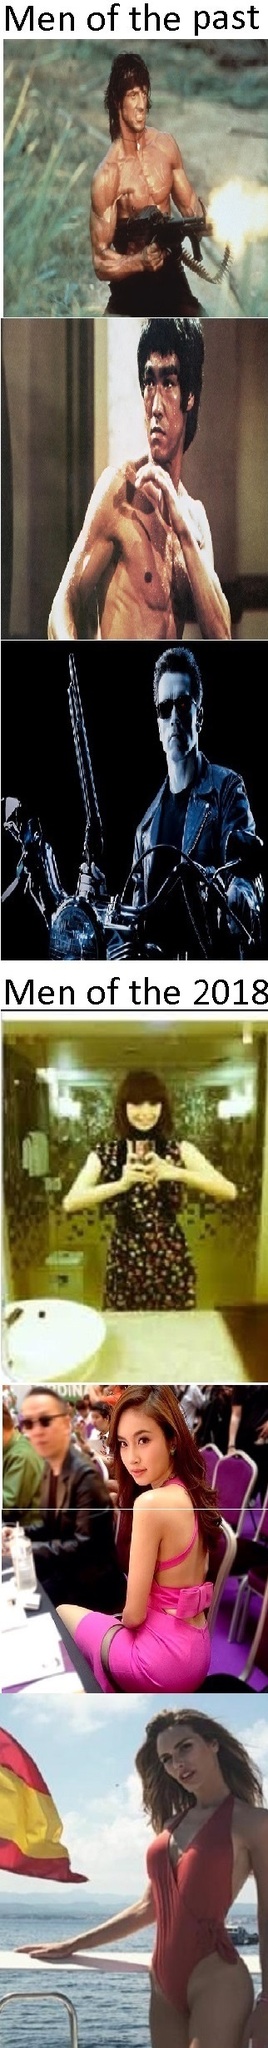 men of the past vs men of the 2018 - meme